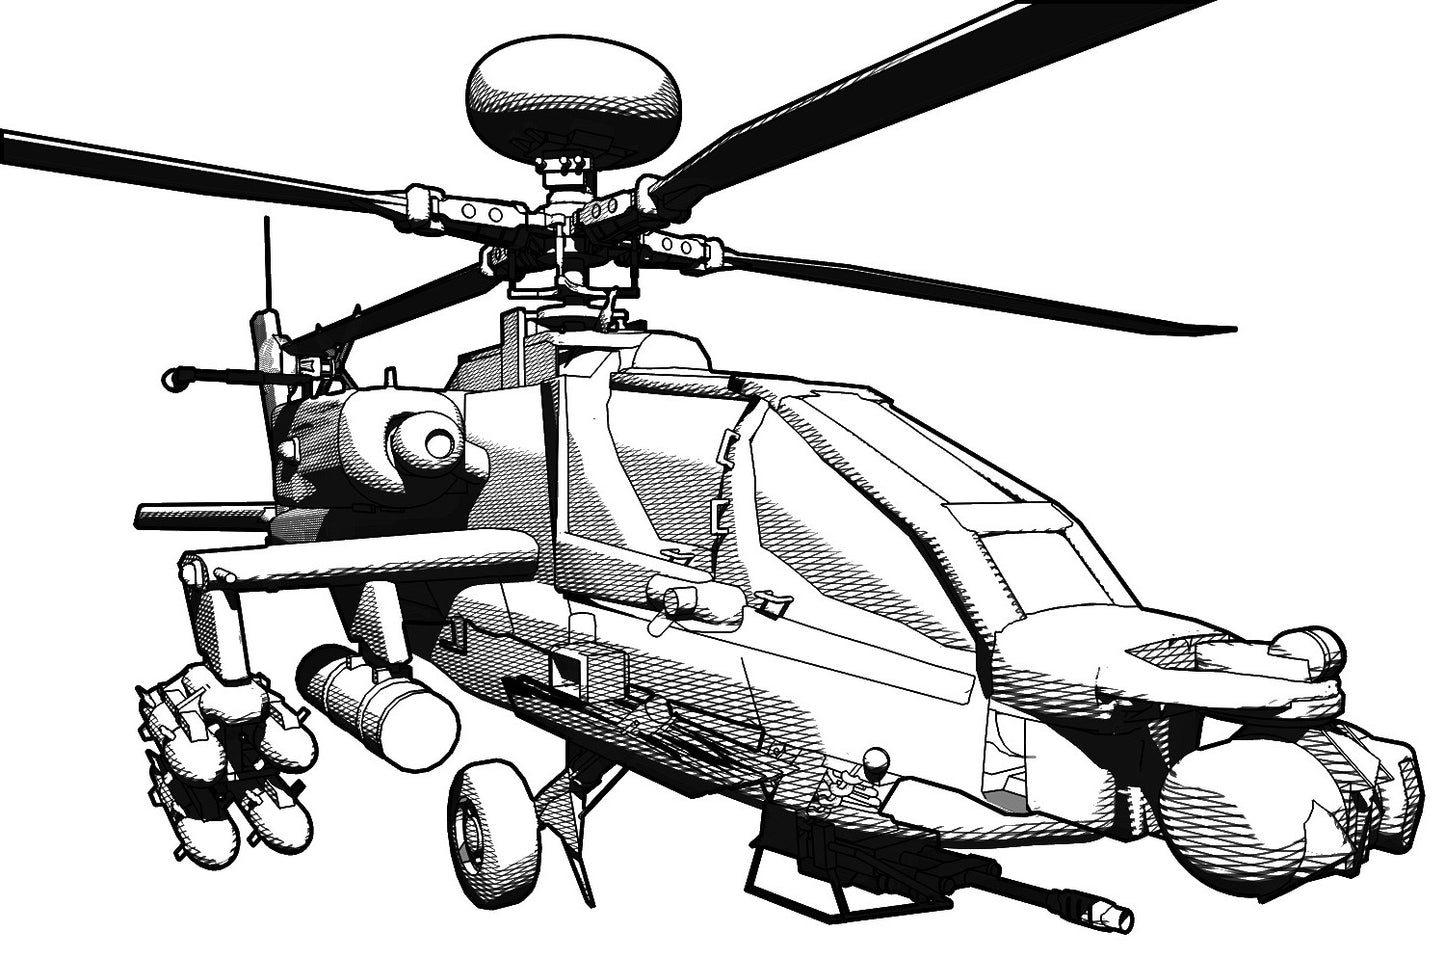 Lethal War Machines - Military, Tanks, Machine Guns, Fighter Jets - Coloring (PDF Book)